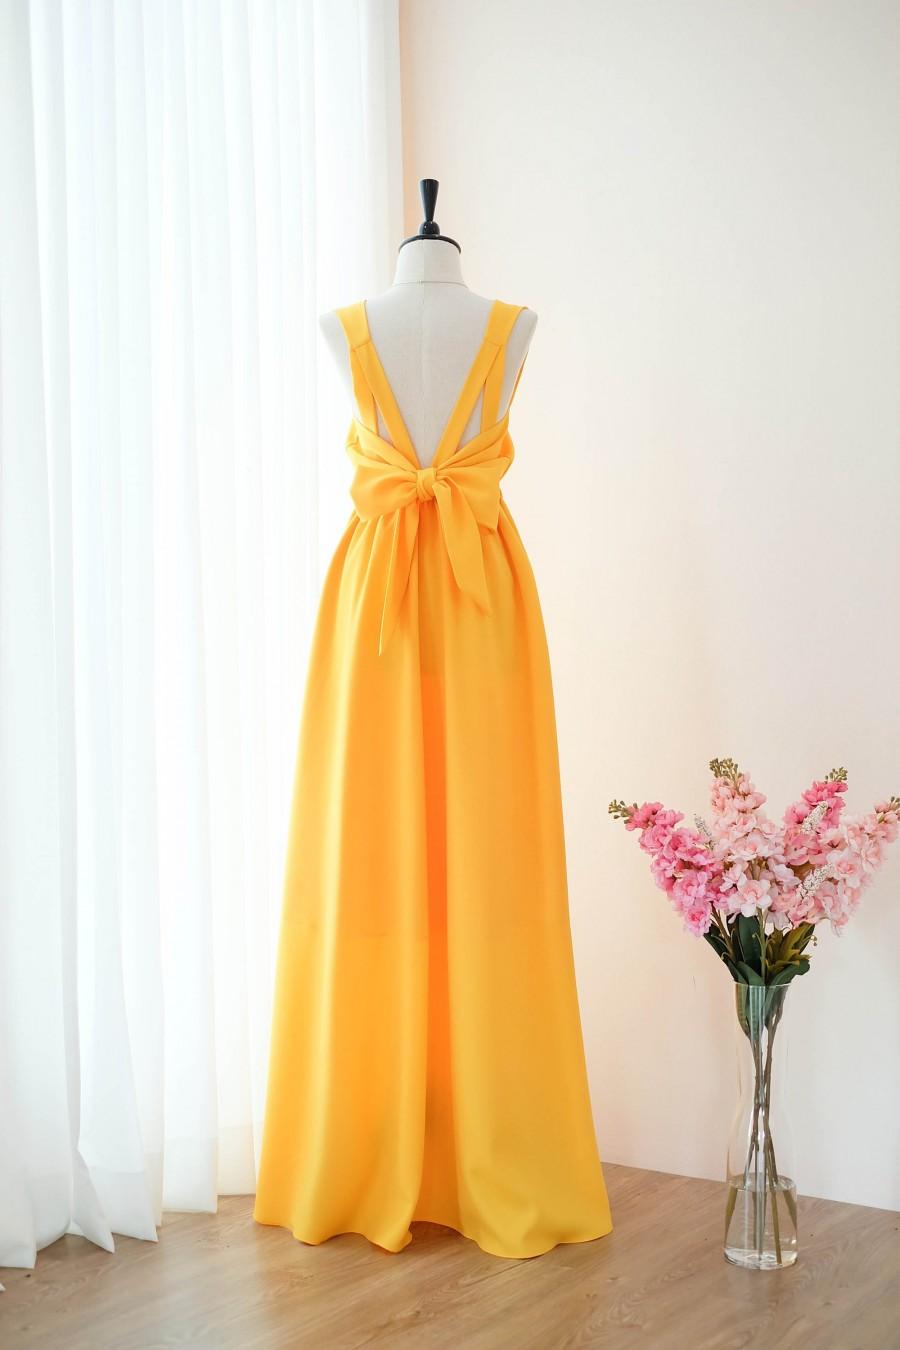 Mariage - Gold yellow dress Long Bridesmaid dress Wedding Dress Long Prom dress Party dress Cocktail dress Maxi dress Evening Gown